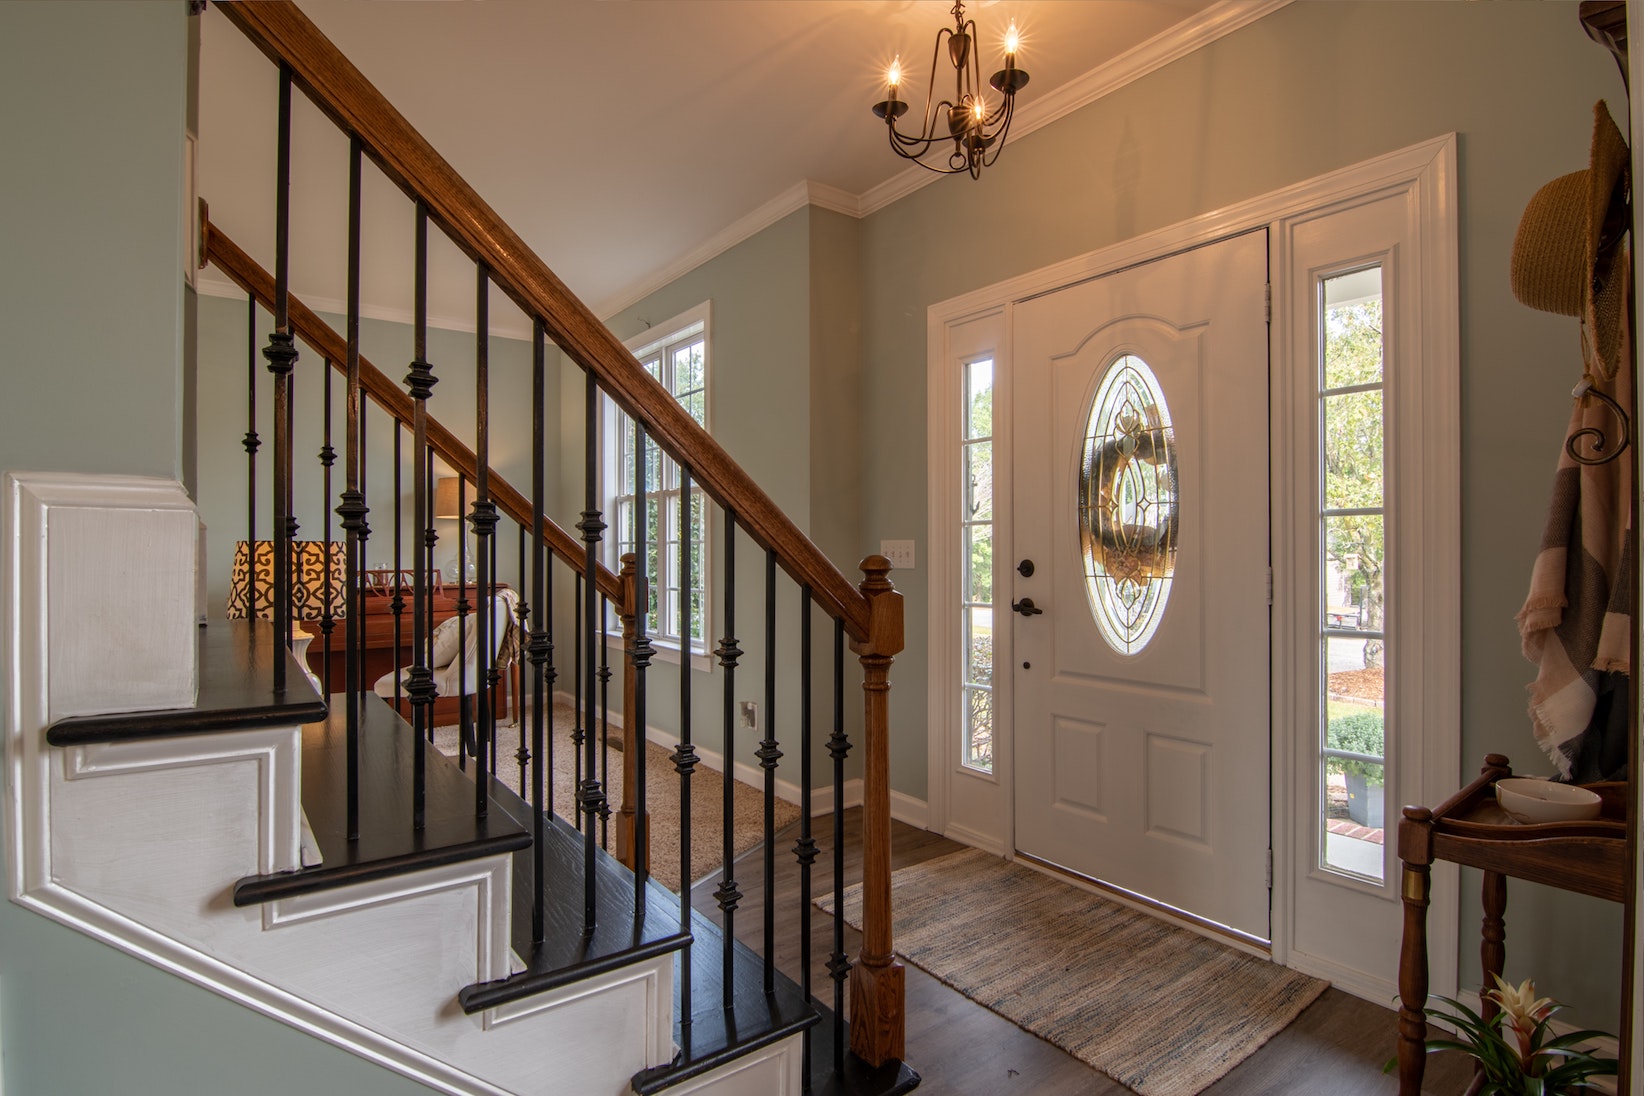 Steel or Fiberglass Exterior Doors – What Is Better for Your Property?